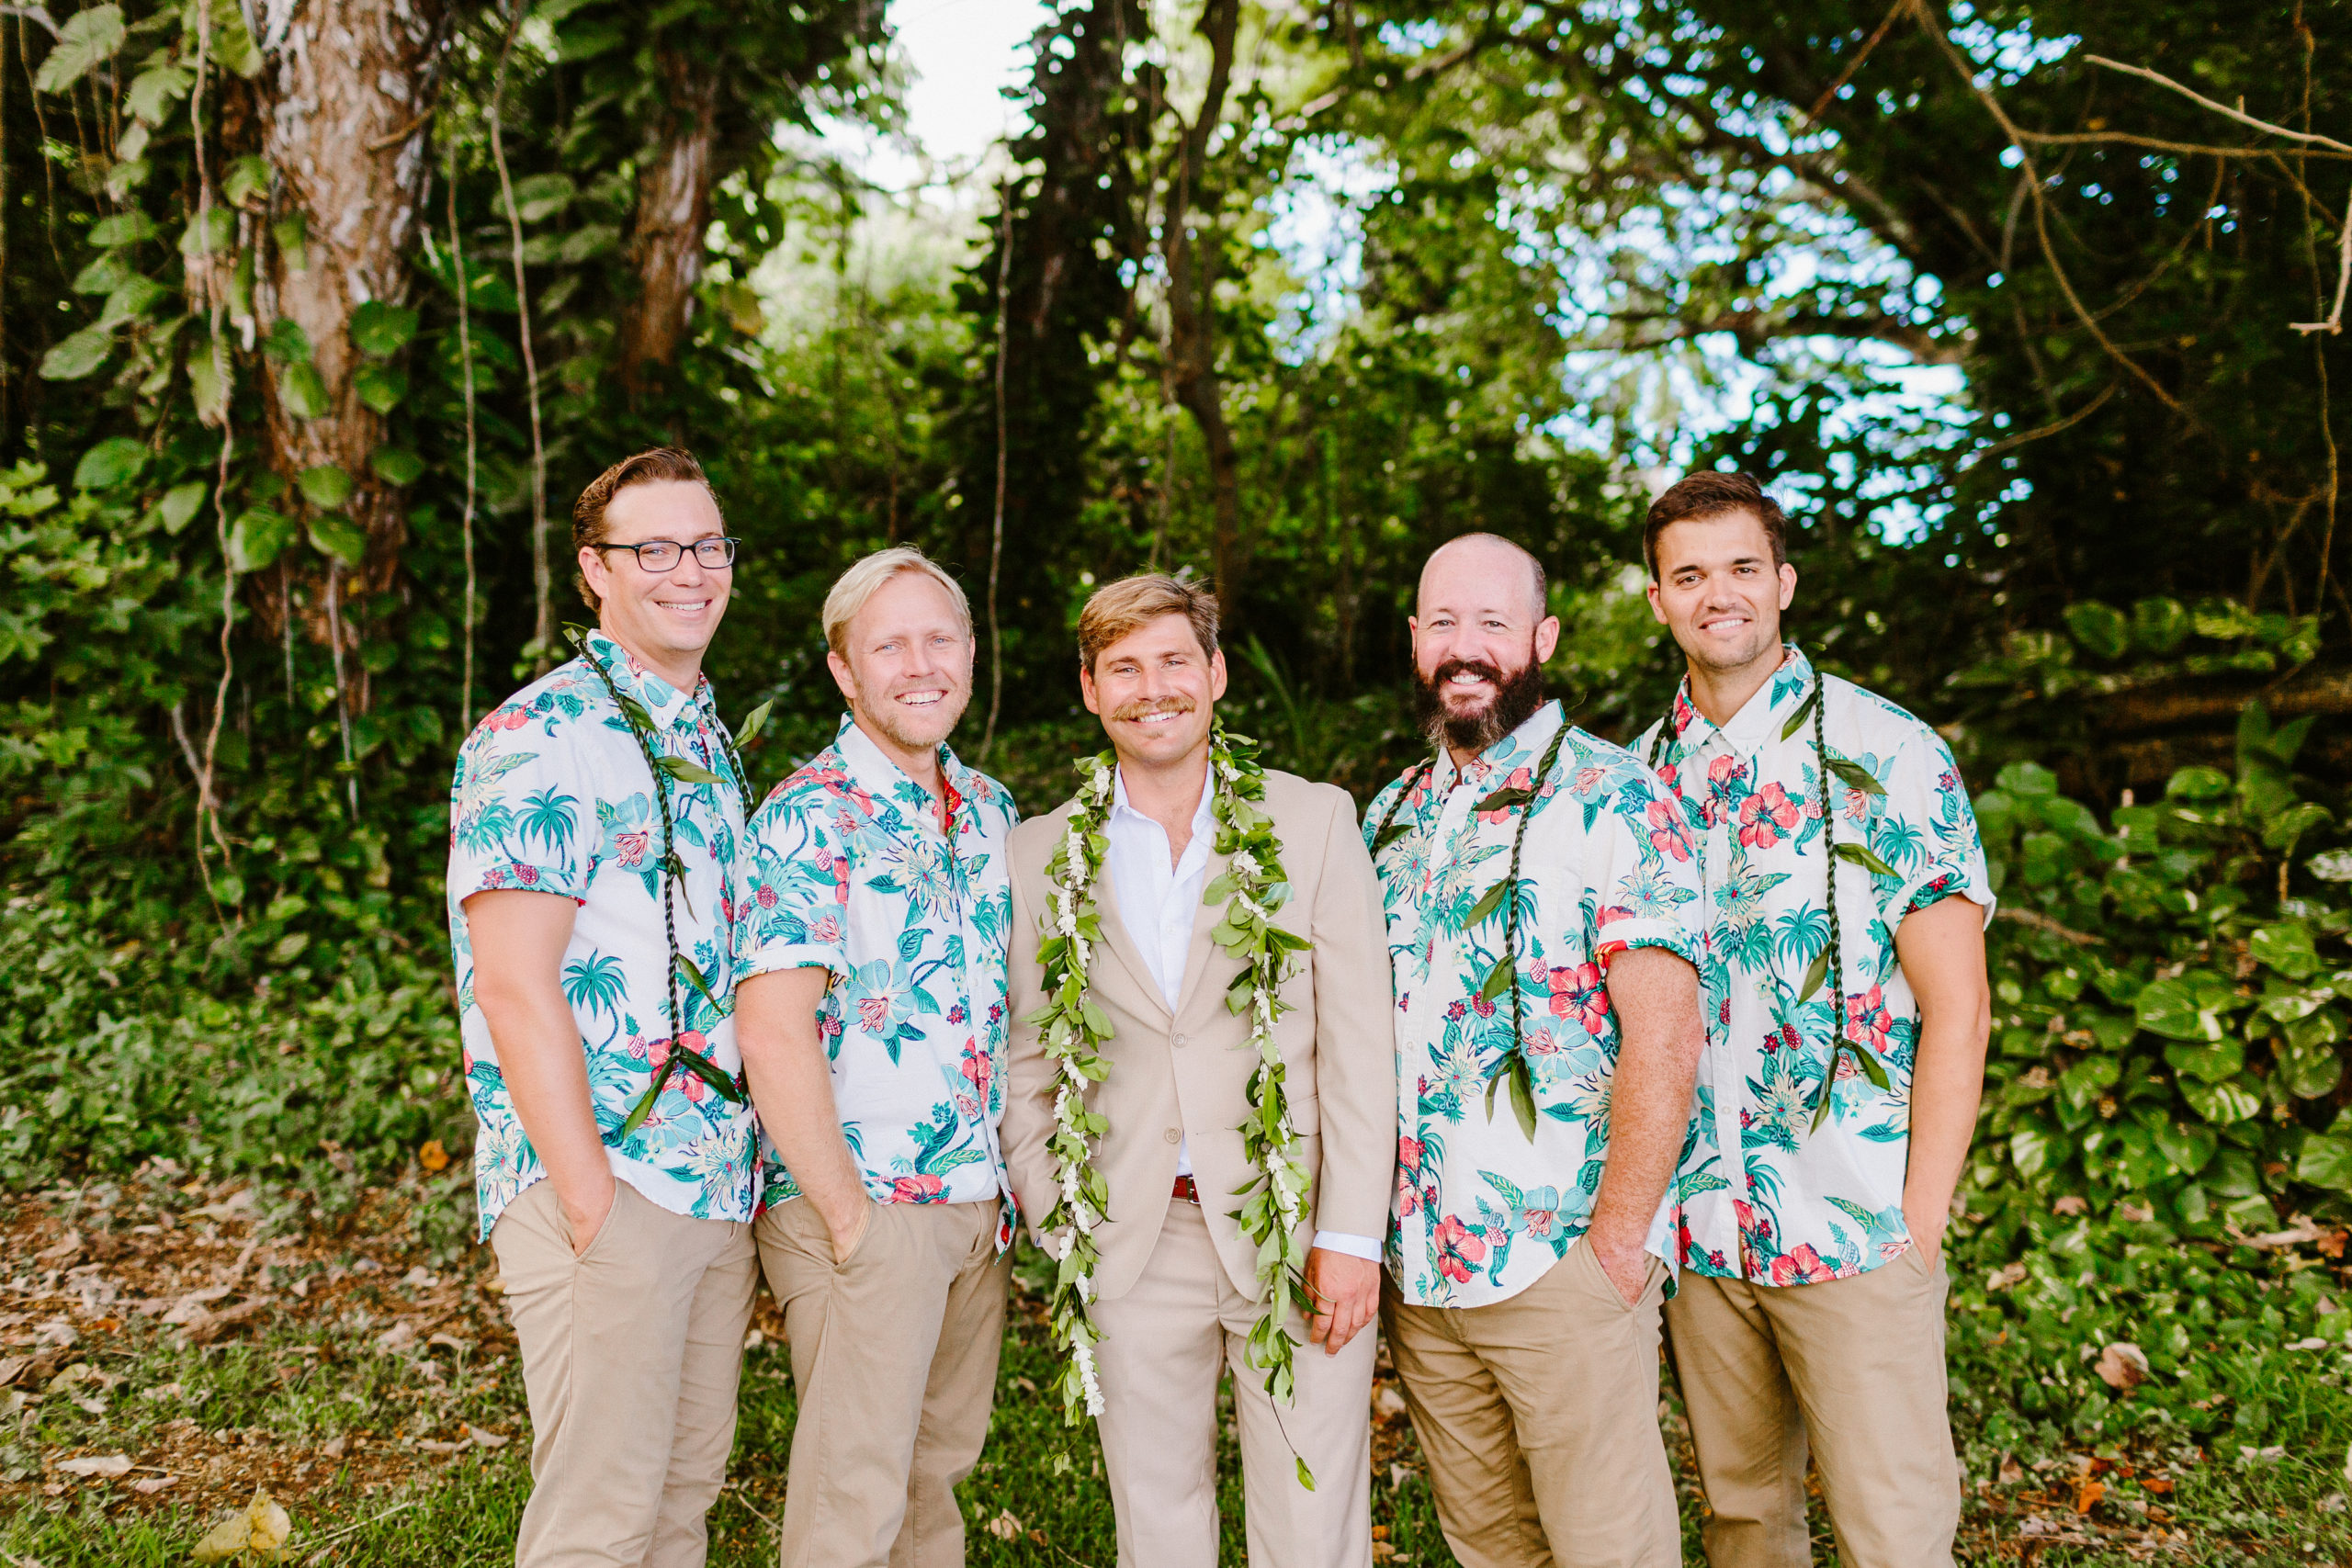 Groomsmen wearing aloha shirts and leis